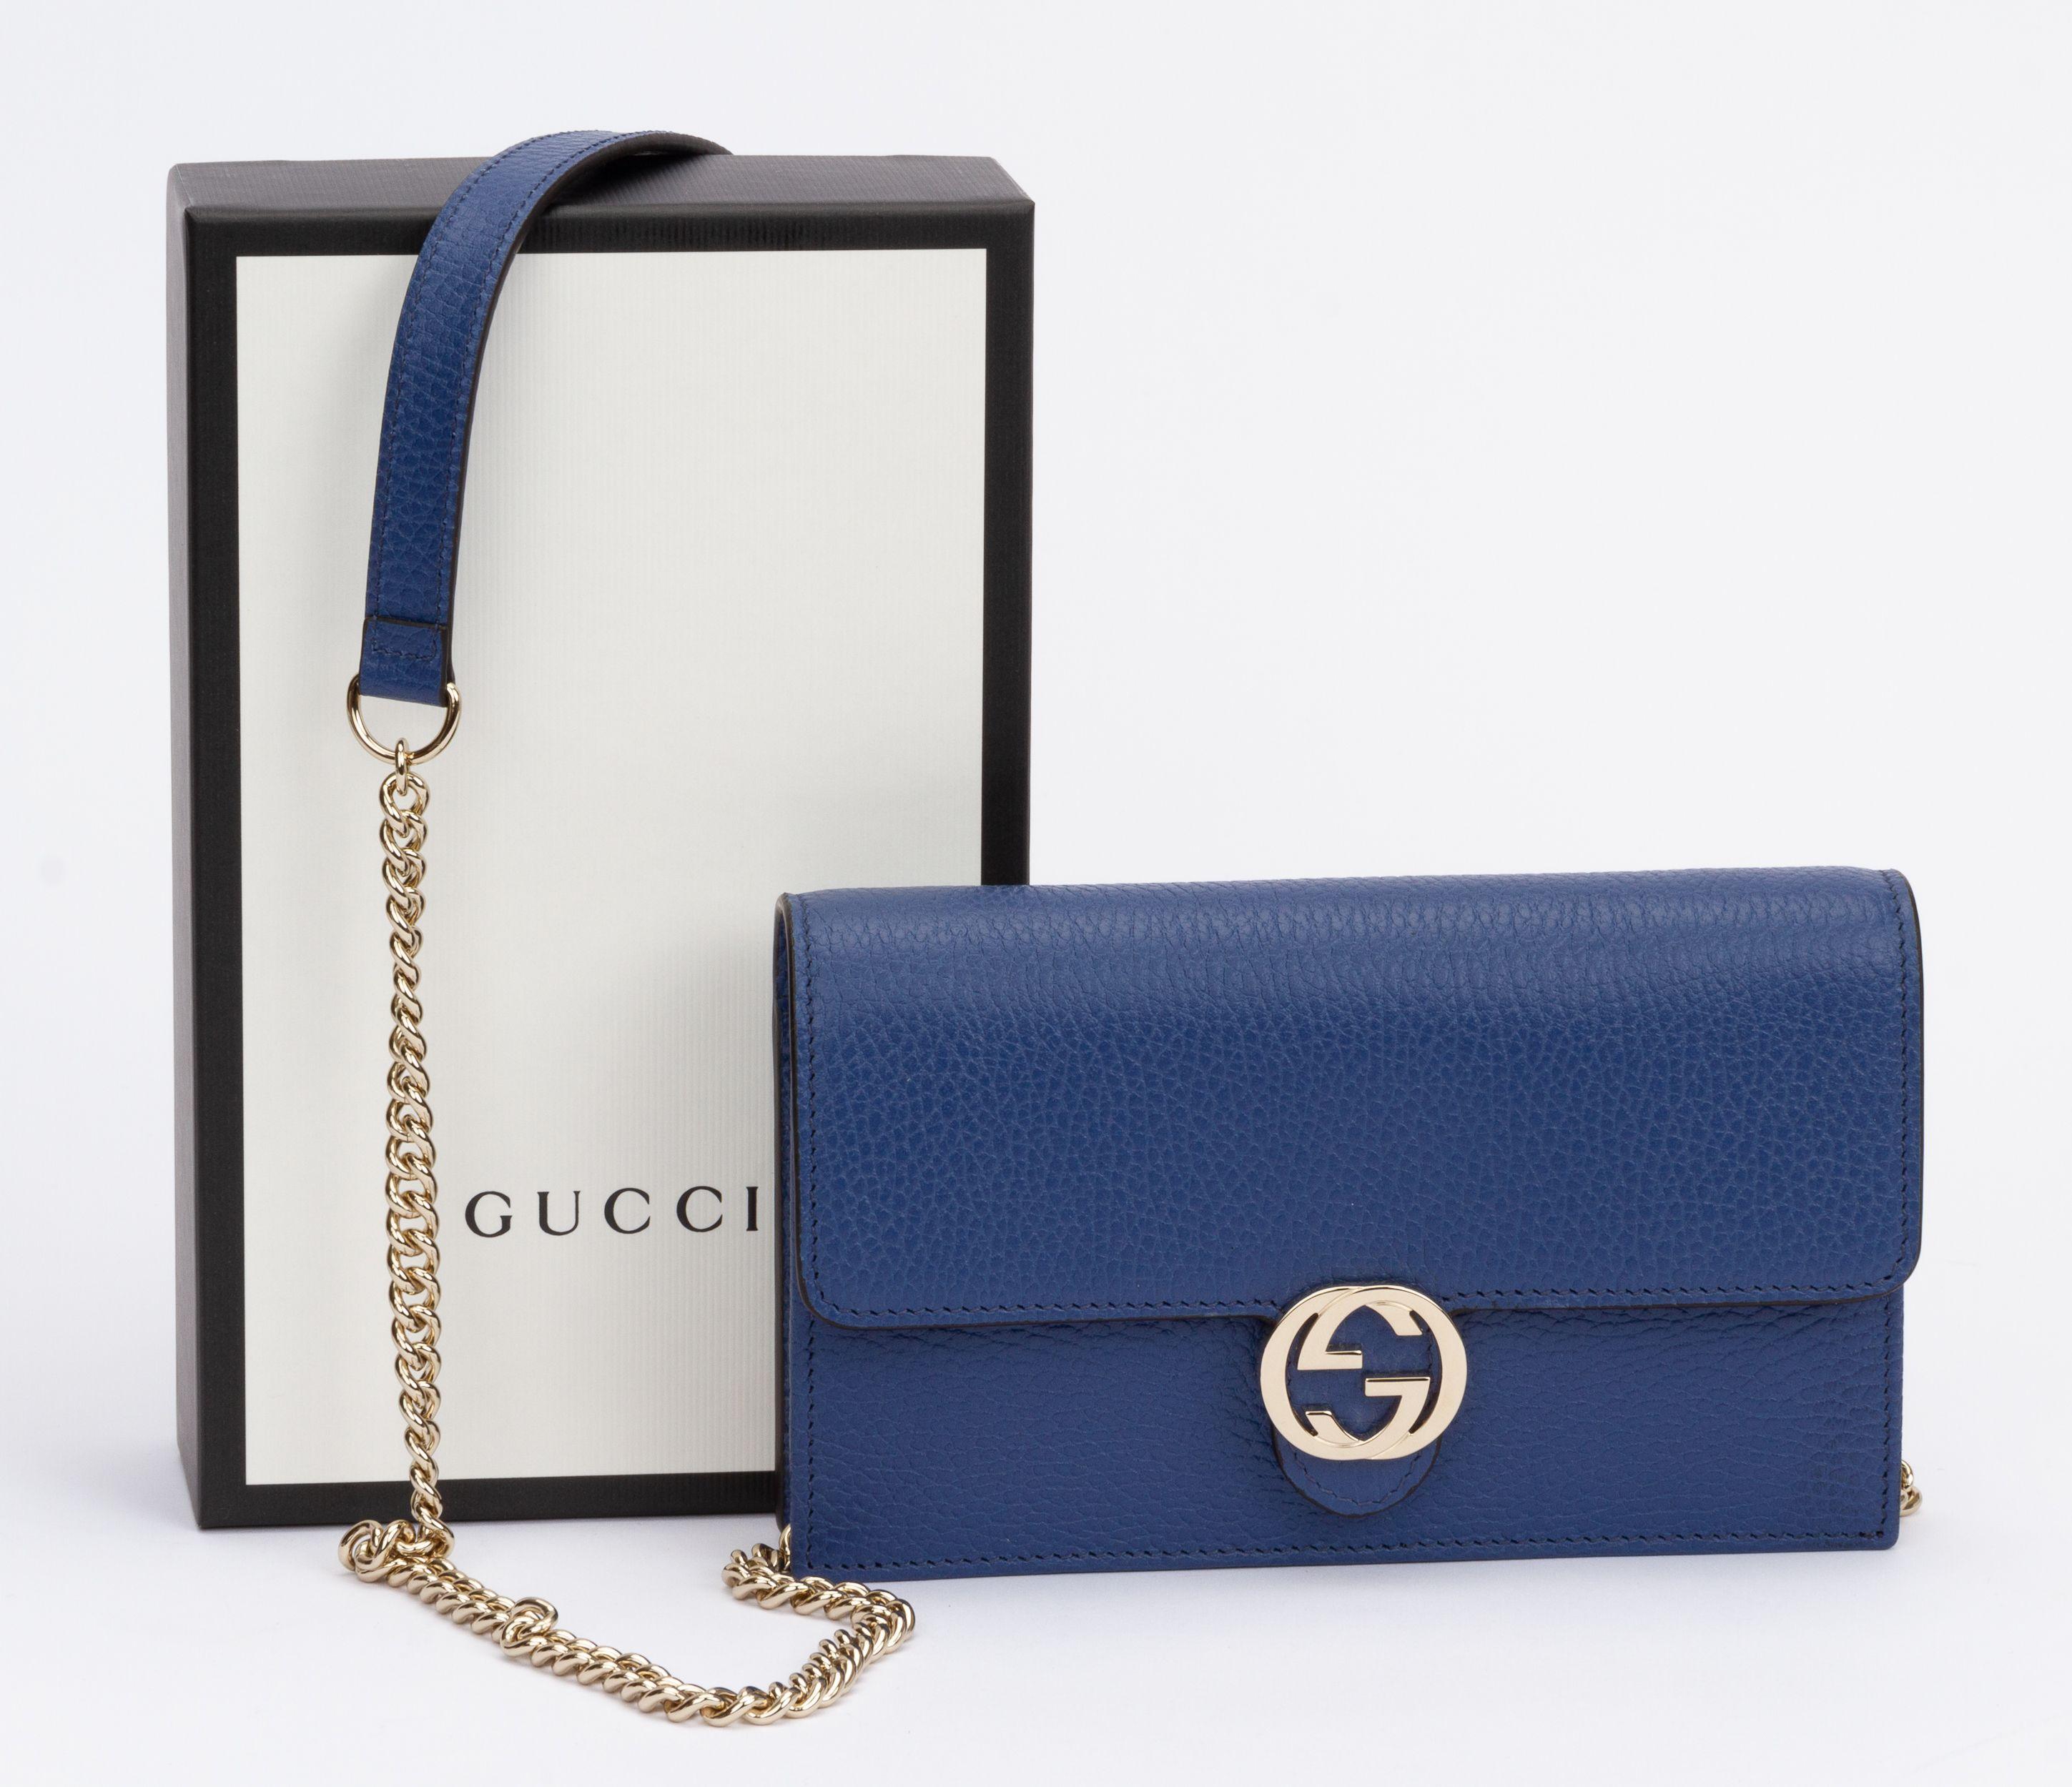 Gucci NIB Blue Letaher Cross Body Bag For Sale 2